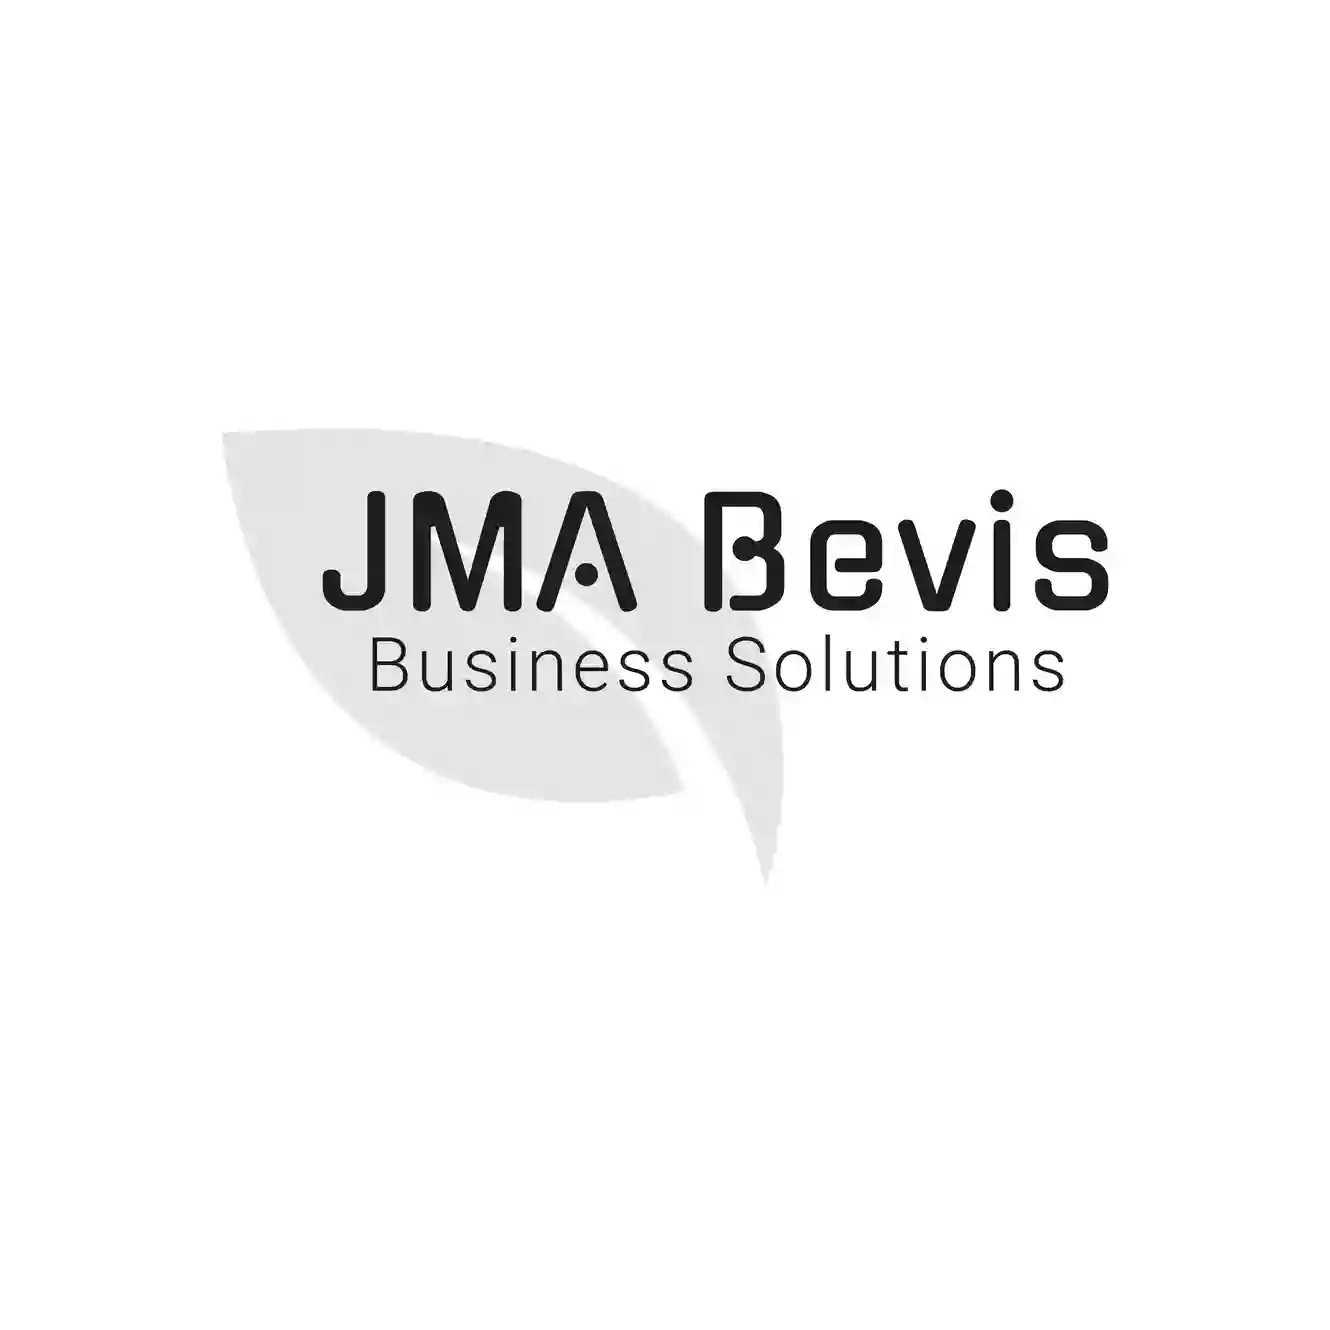 JMA Bevis Business Solutions